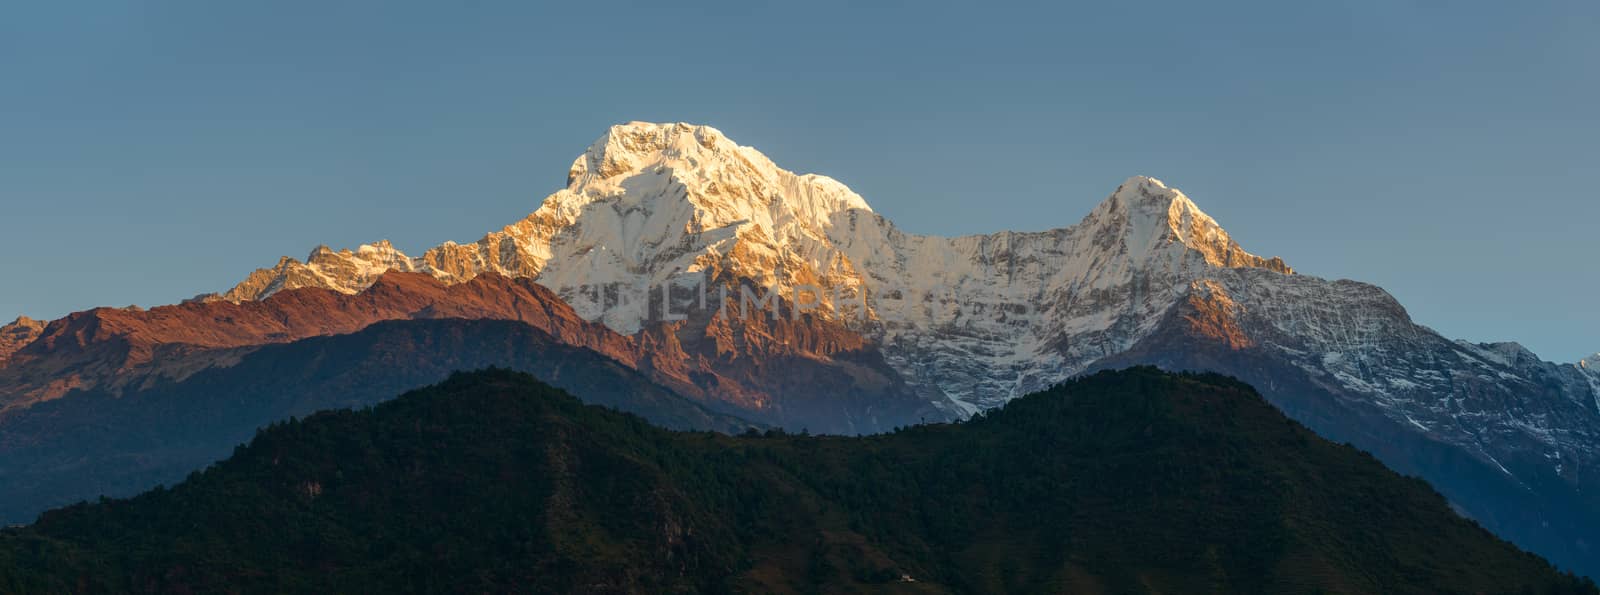 Annapurnas at sunrise panoramic view, Nepal by dutourdumonde